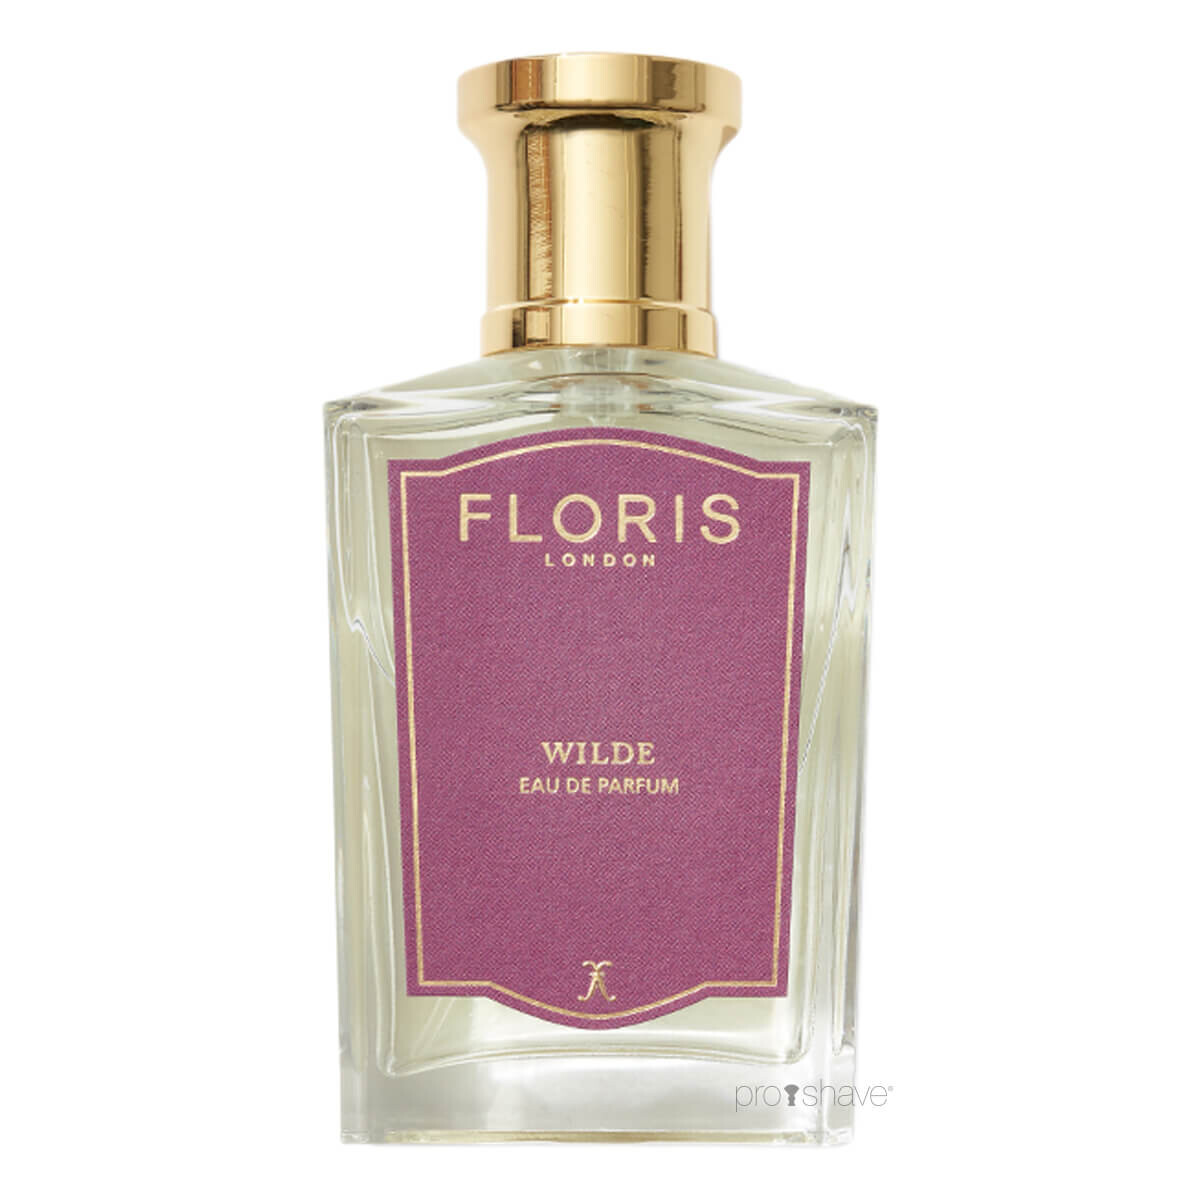 Billede af Floris Wilde, Eau de Parfum, 50 ml.